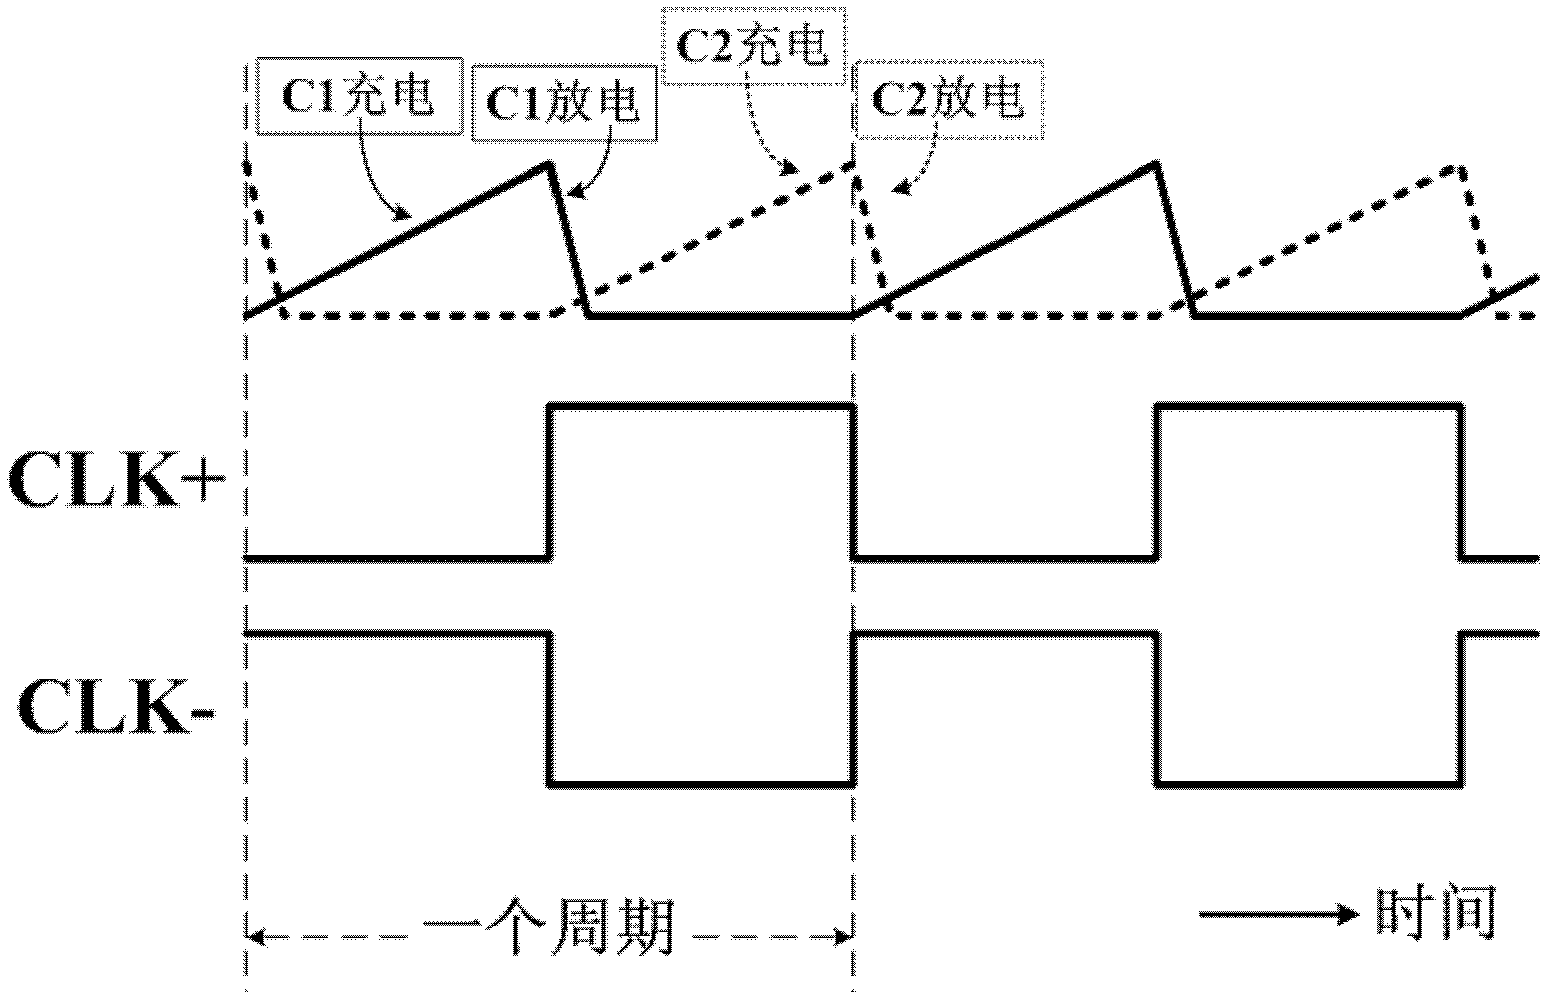 Current controlled oscillator